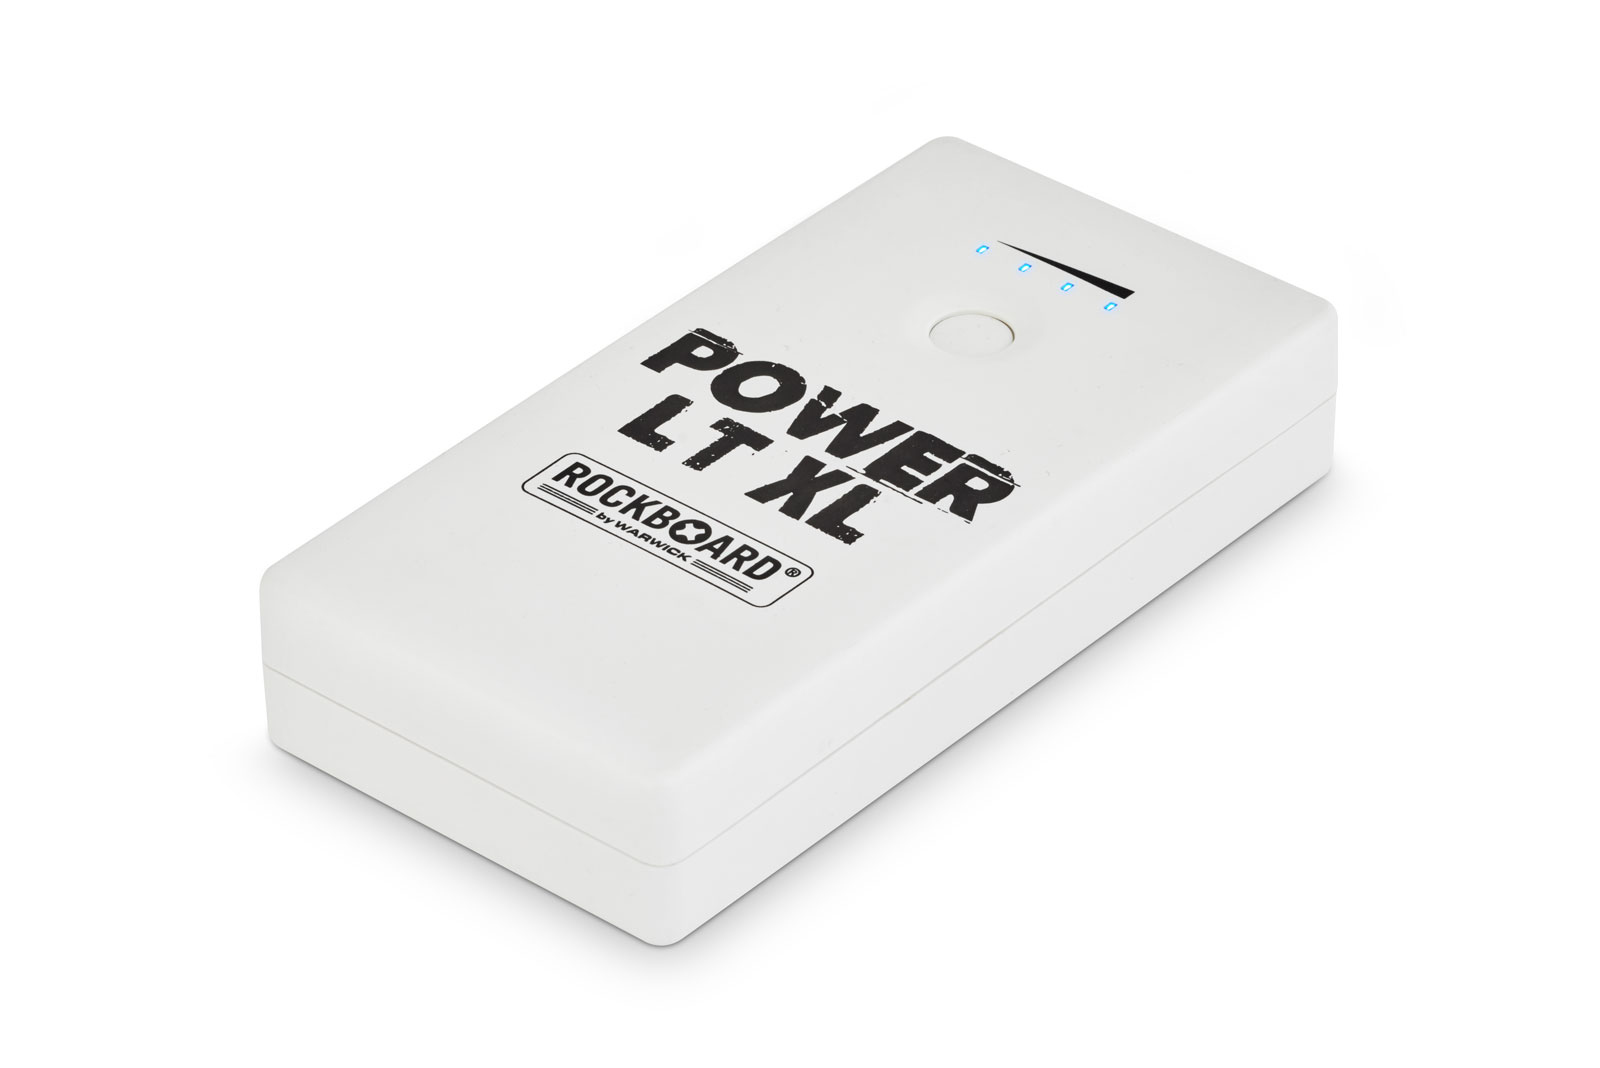 Rockboard Power Lt Xl White - Power supply - Variation 1